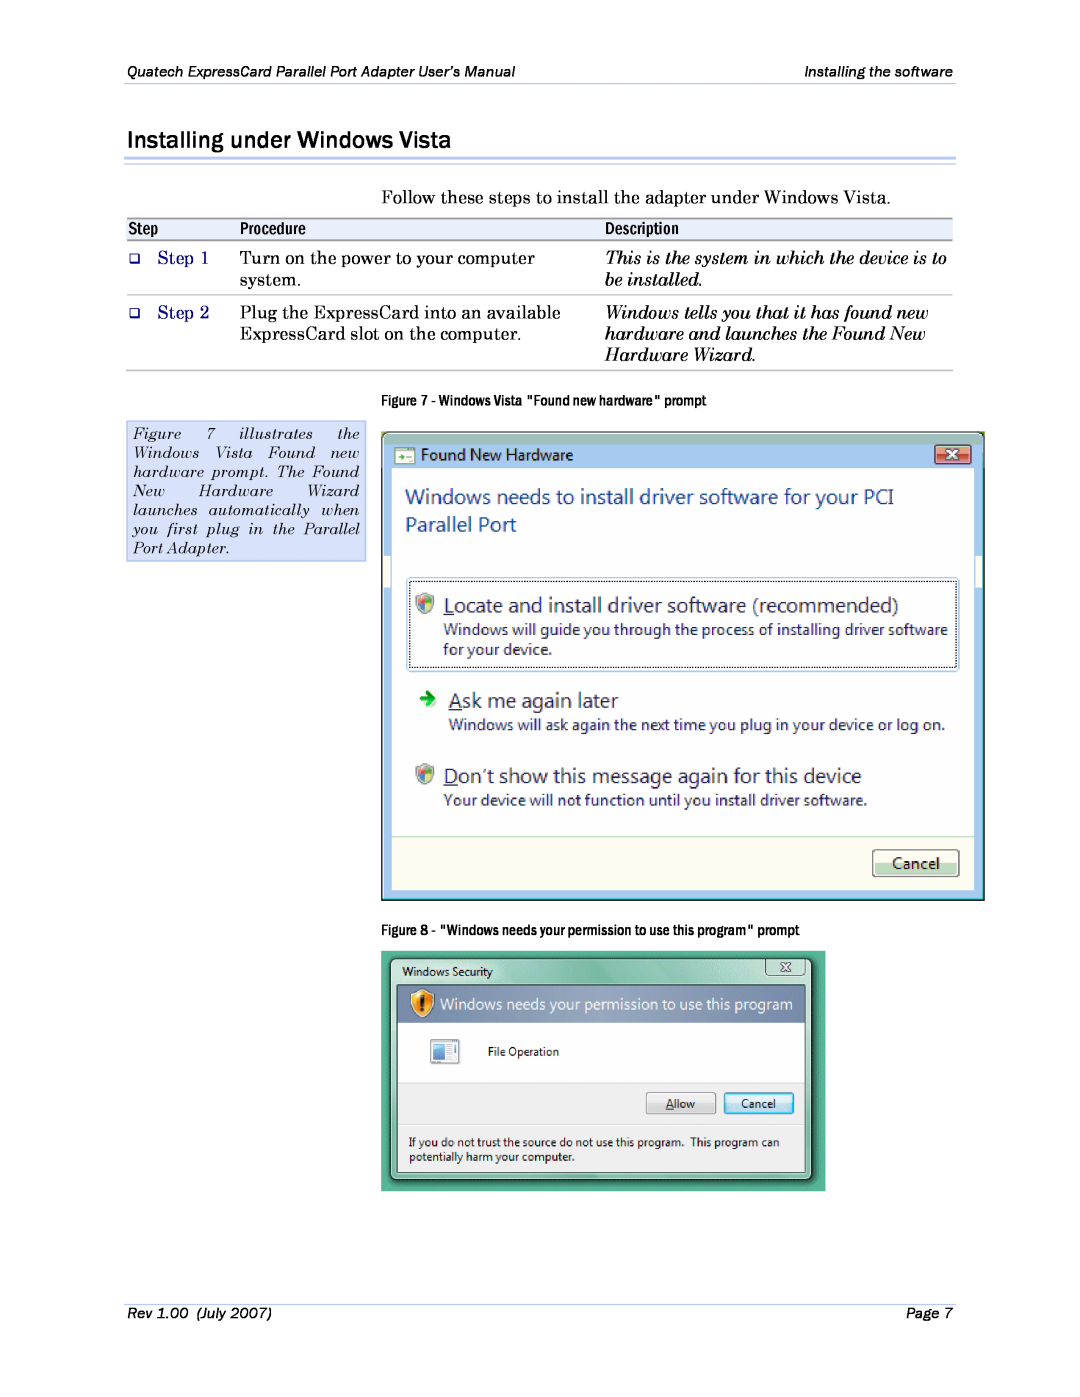 Quatech SPPXP-100 Installing under Windows Vista, Step, Procedure, Description, be installed, Hardware Wizard, Page 